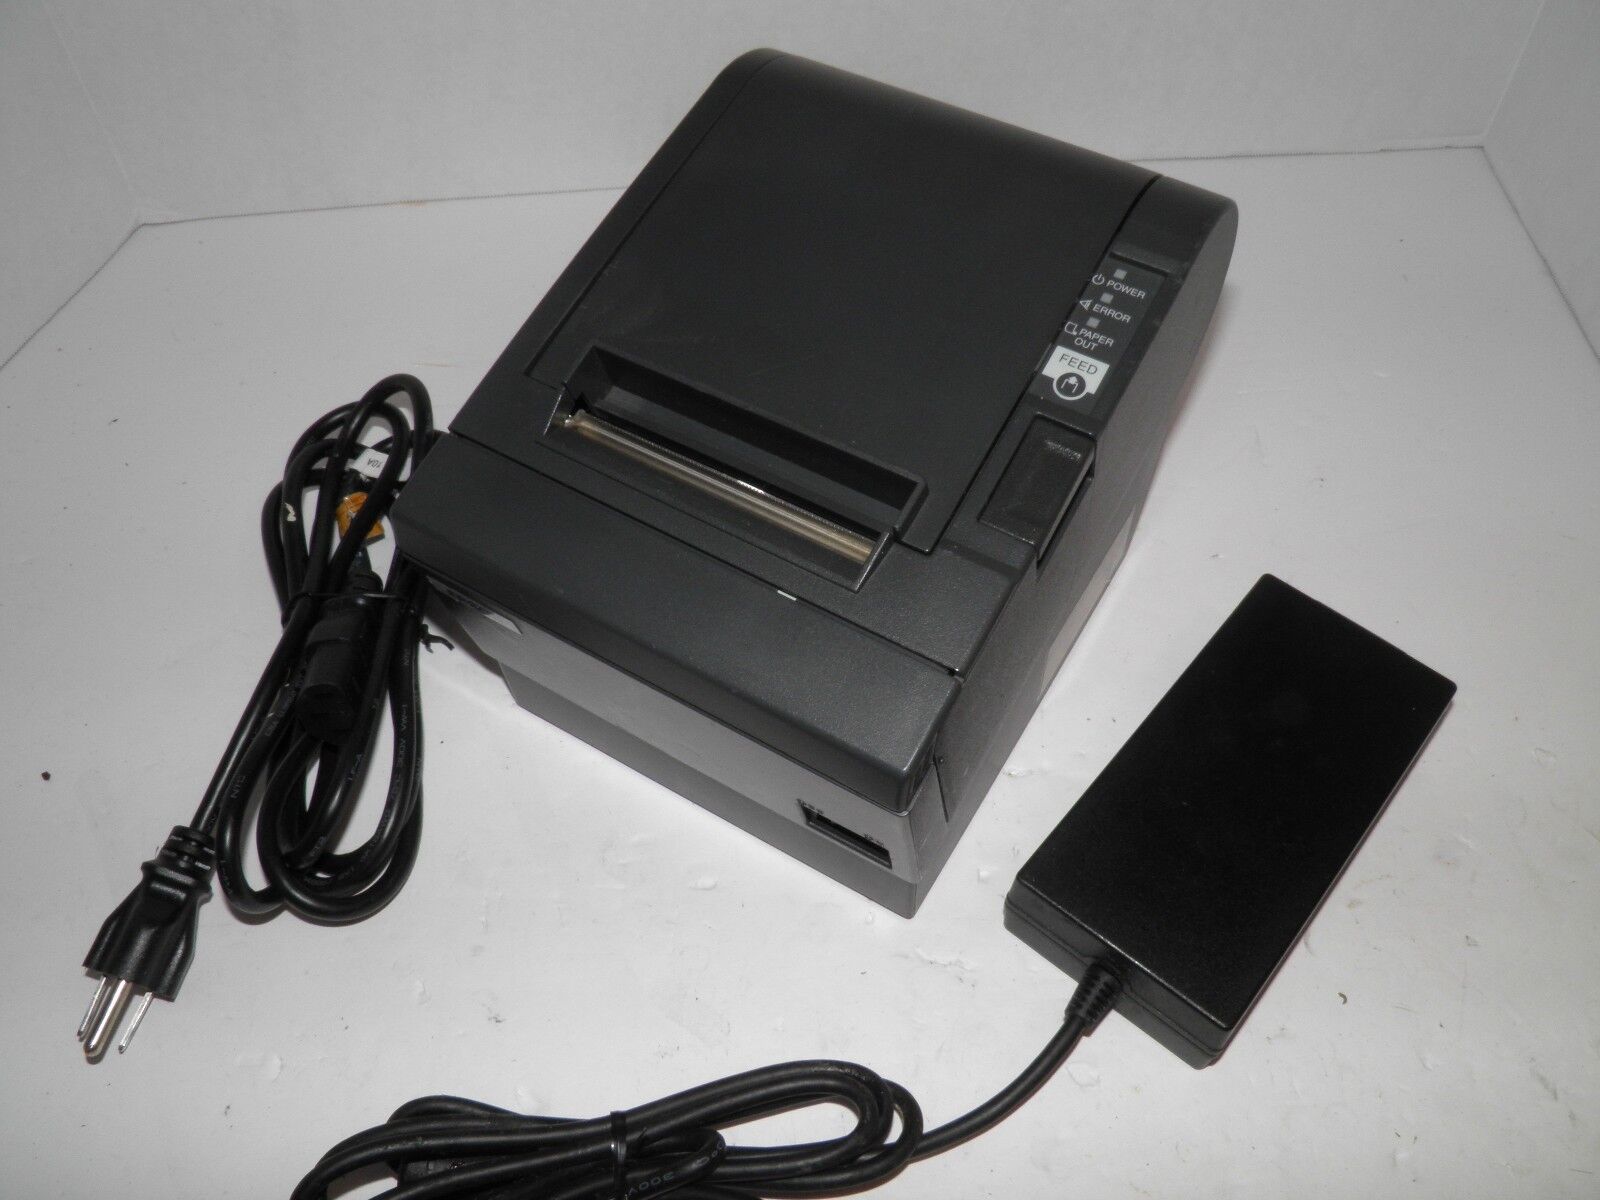  Epson M129C TM-T88III Thermal POS Receipt Printer Serial Printer w Power  - $94.99